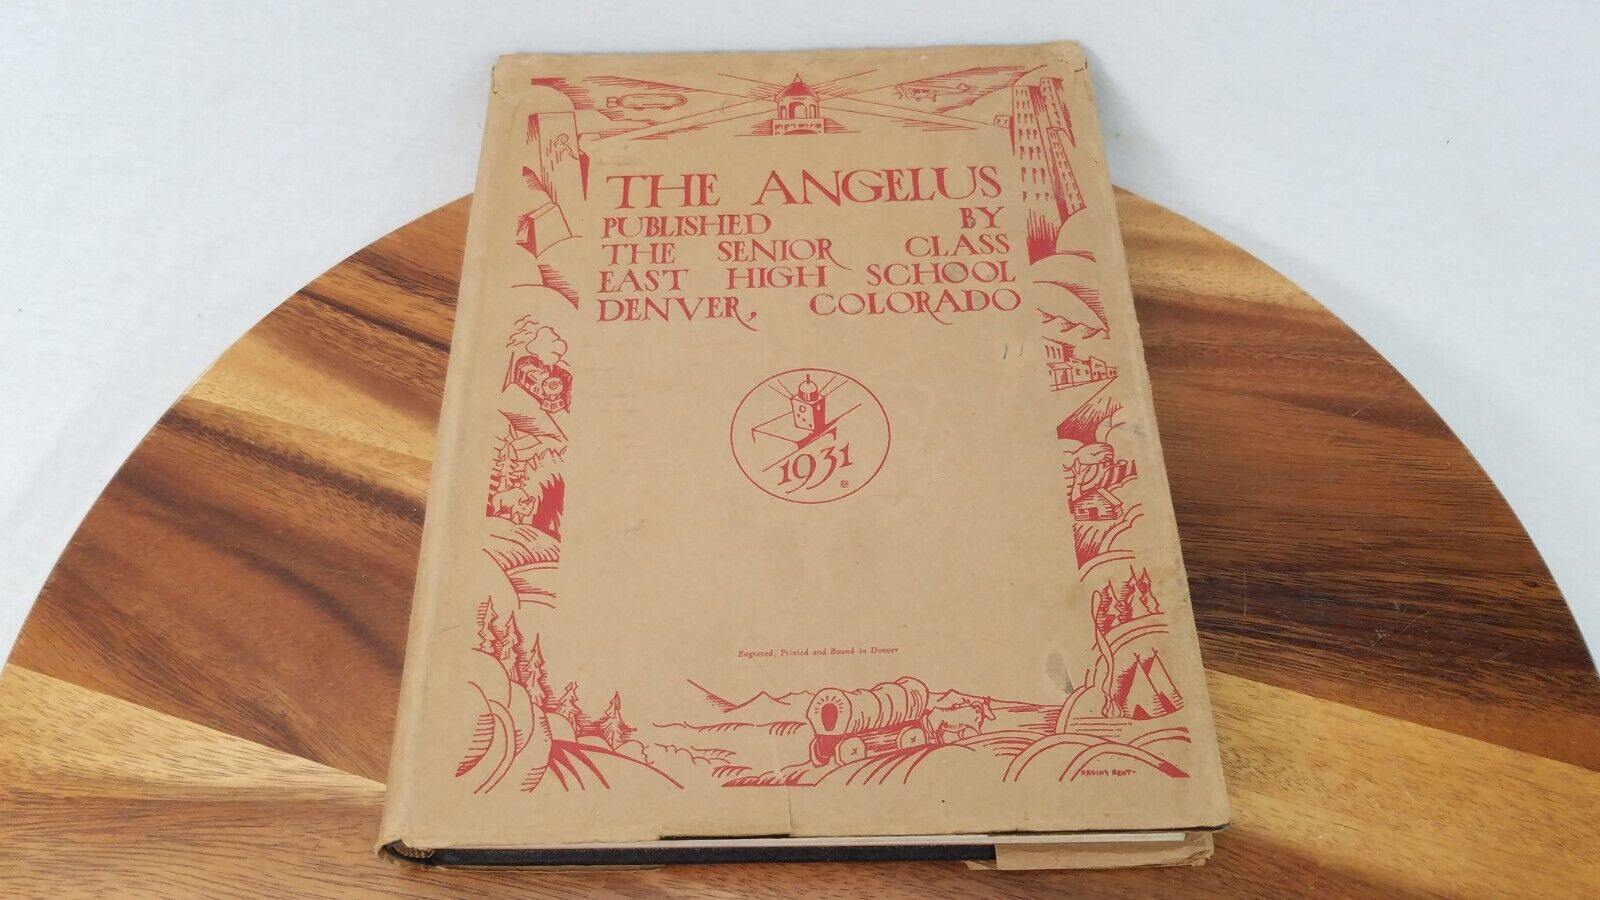 1931 EAST HIGH SCHOOL YEARBOOK, THE ANGELUS, DENVER, COLORADO